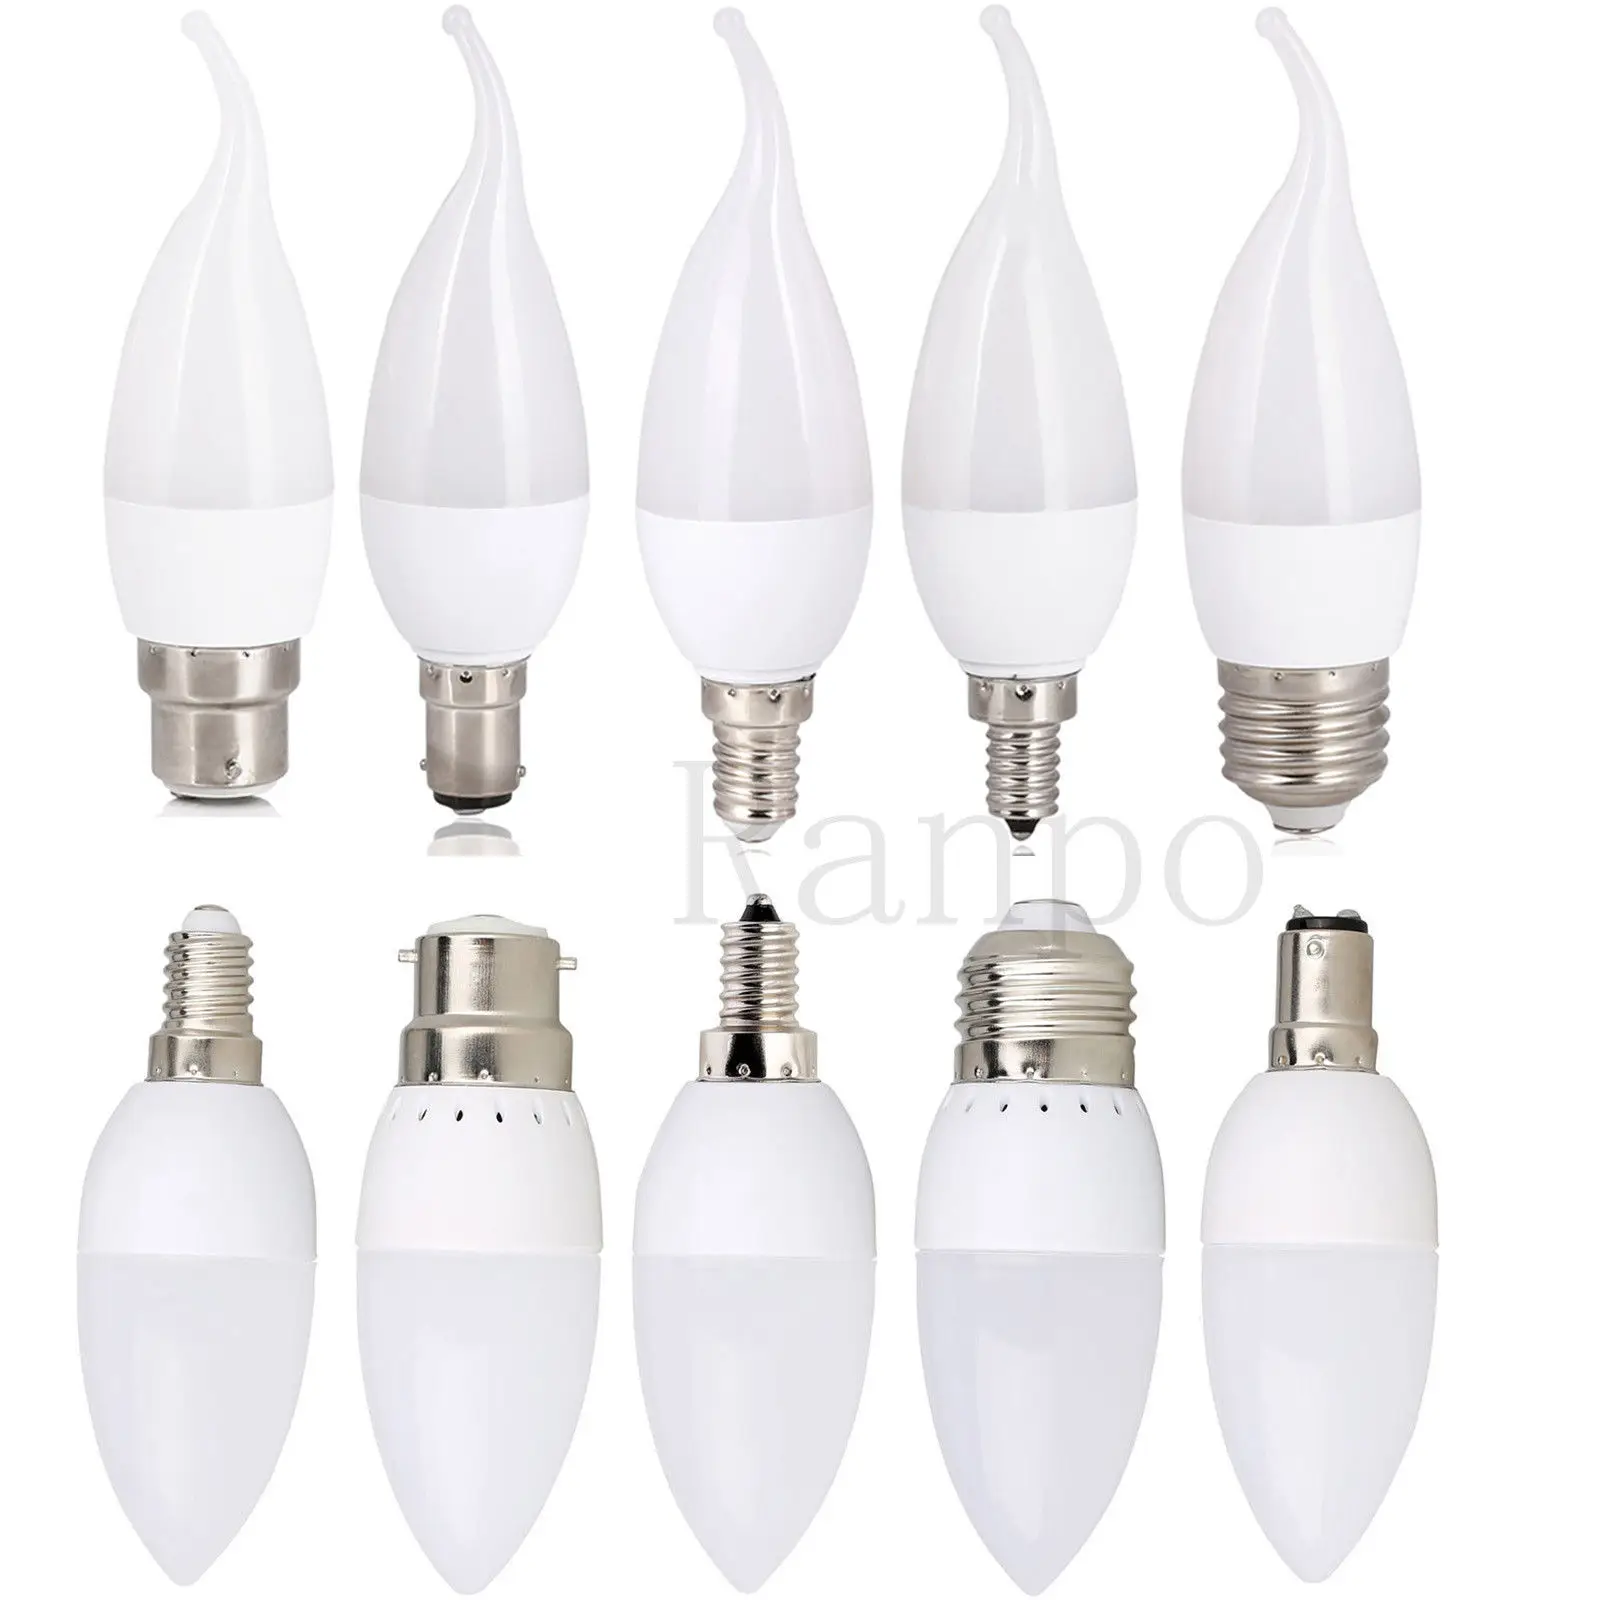 

E12 E14 E27 LED Candle Light Bulb Flame Tip B22 Screw 85-265V 3W Chandelier Lamp 2835 SMD Cool Warm White Energy Saving for Home